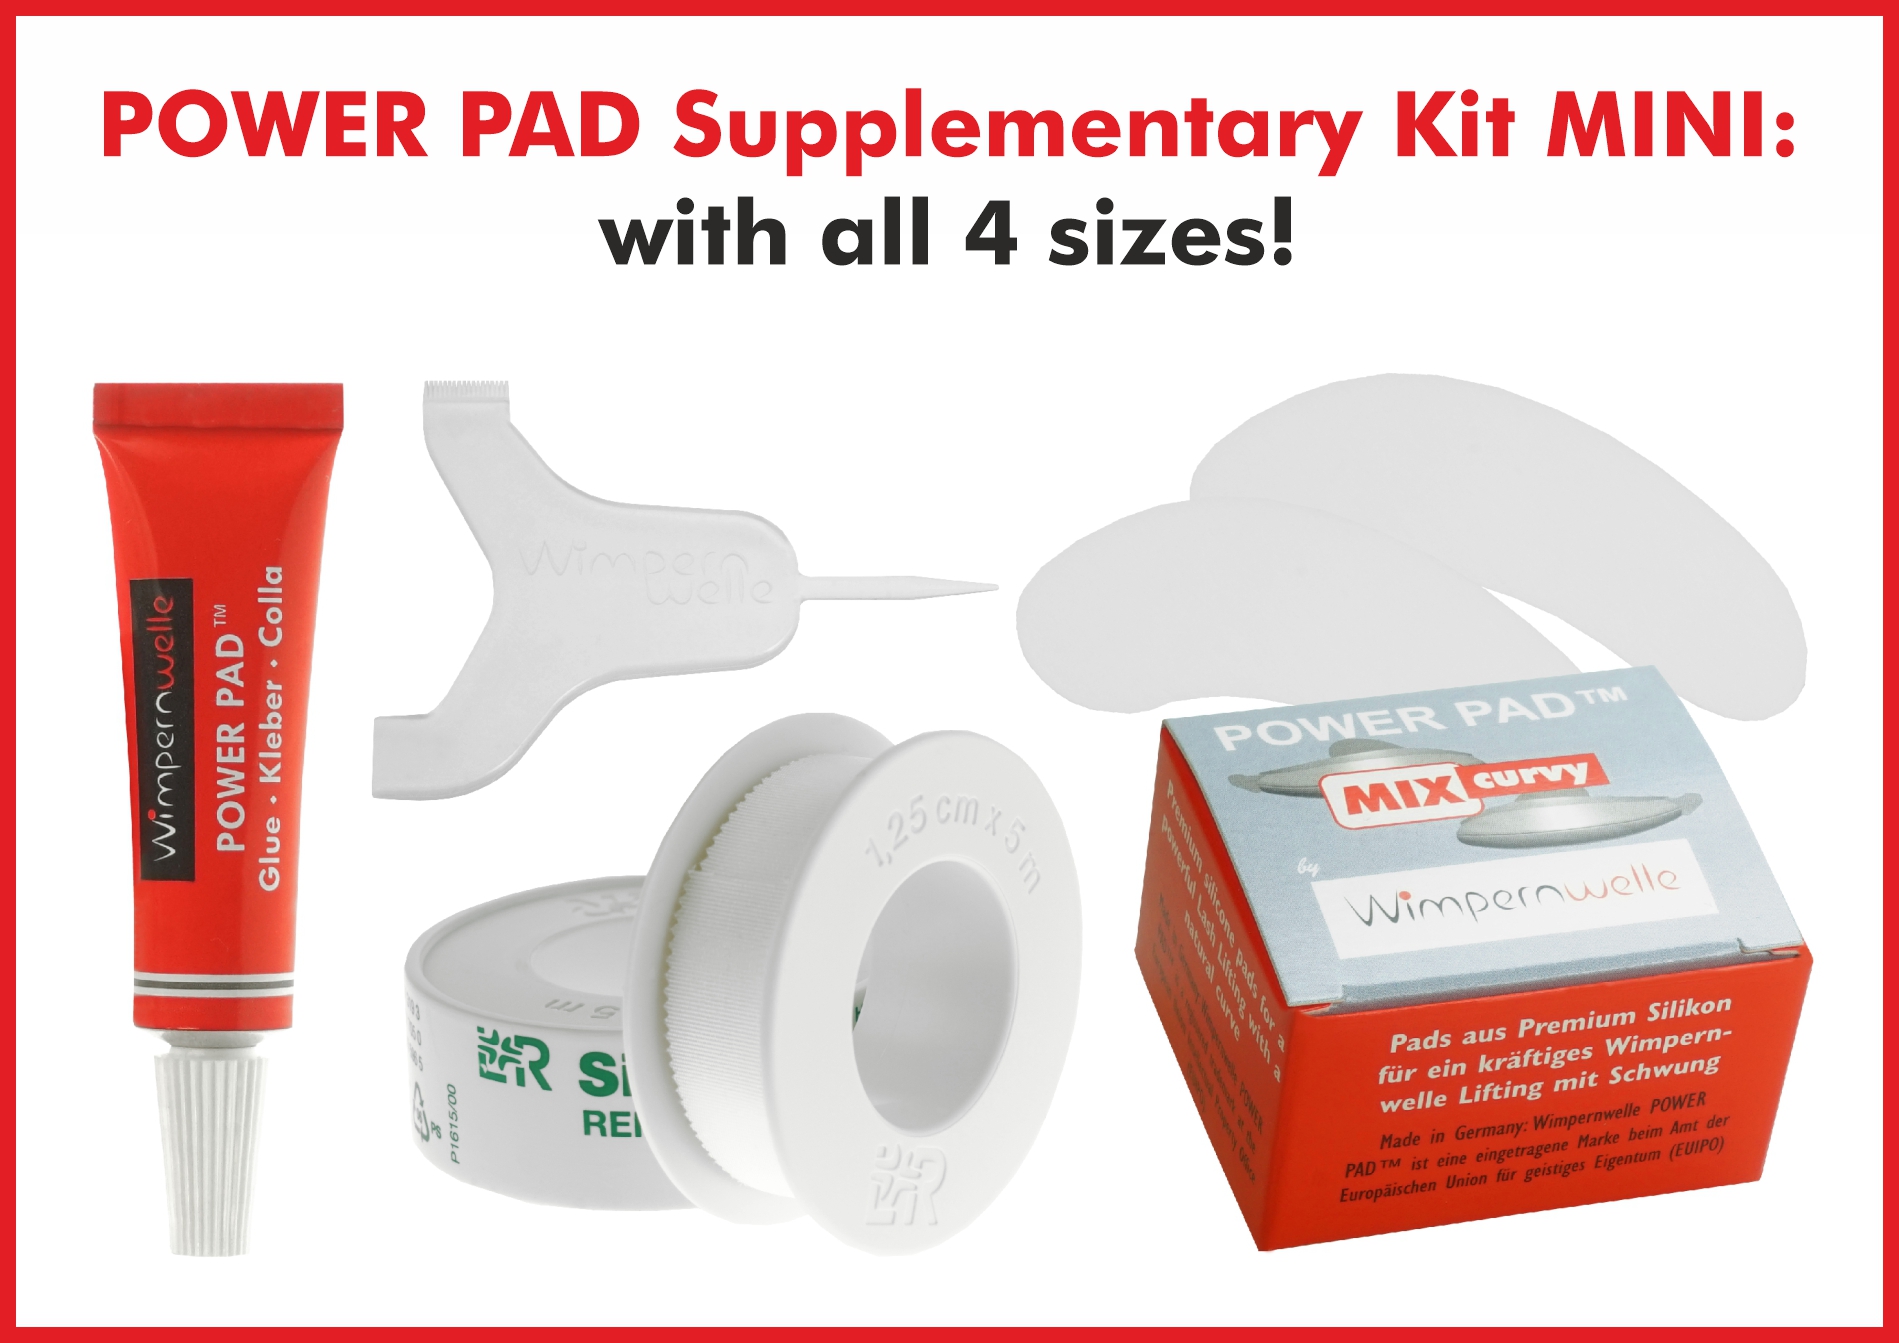 NEW: POWER PAD Supplementary Kit MINI